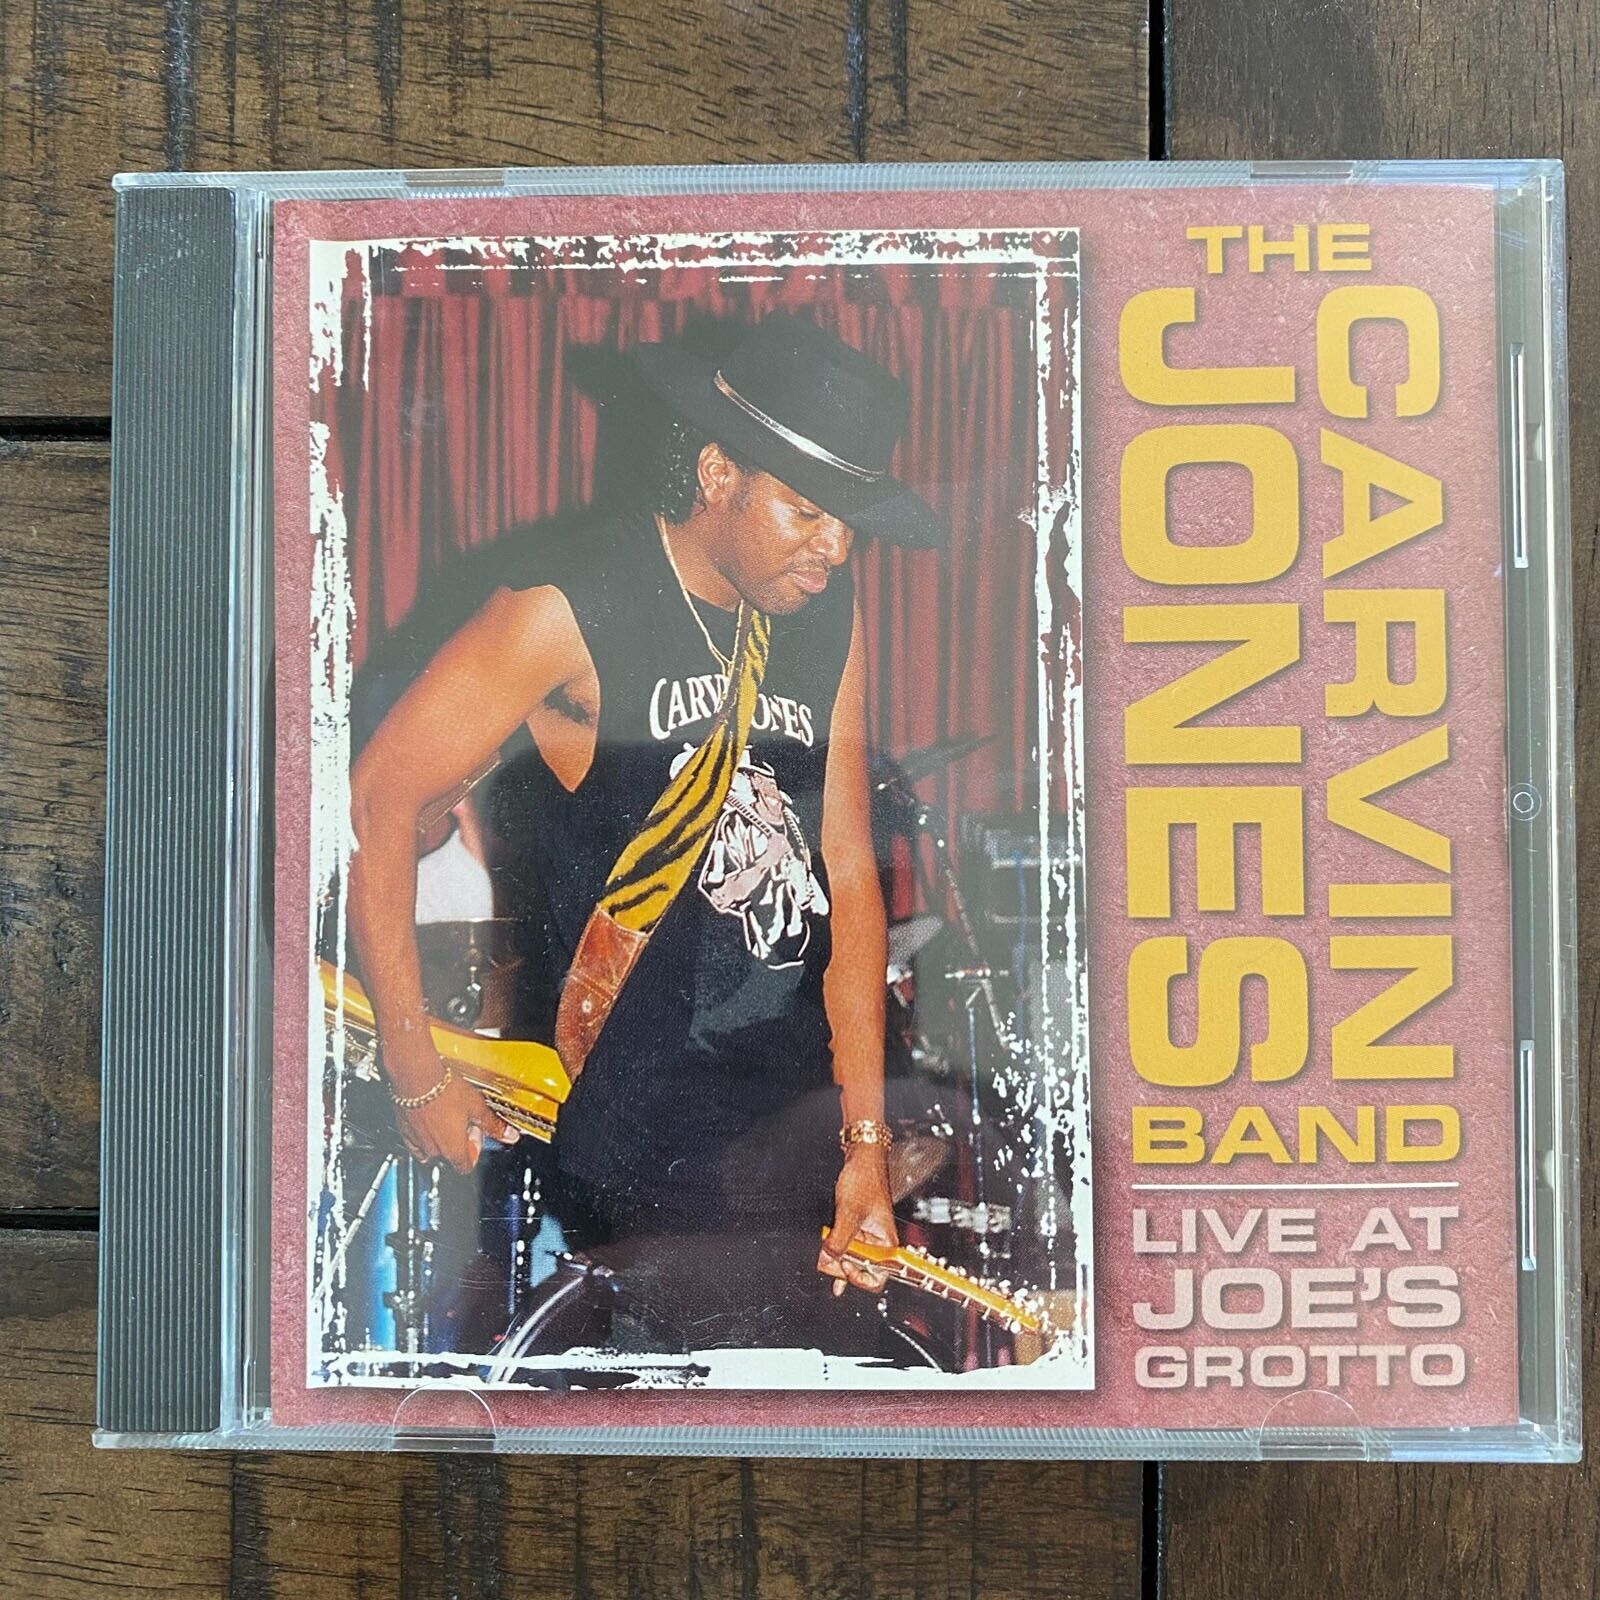 THE CARVIN JONES BAND - LIVE AT JOE'S GROTTO (CD)  1998!!  RARE!!  TEE RECORDS!!